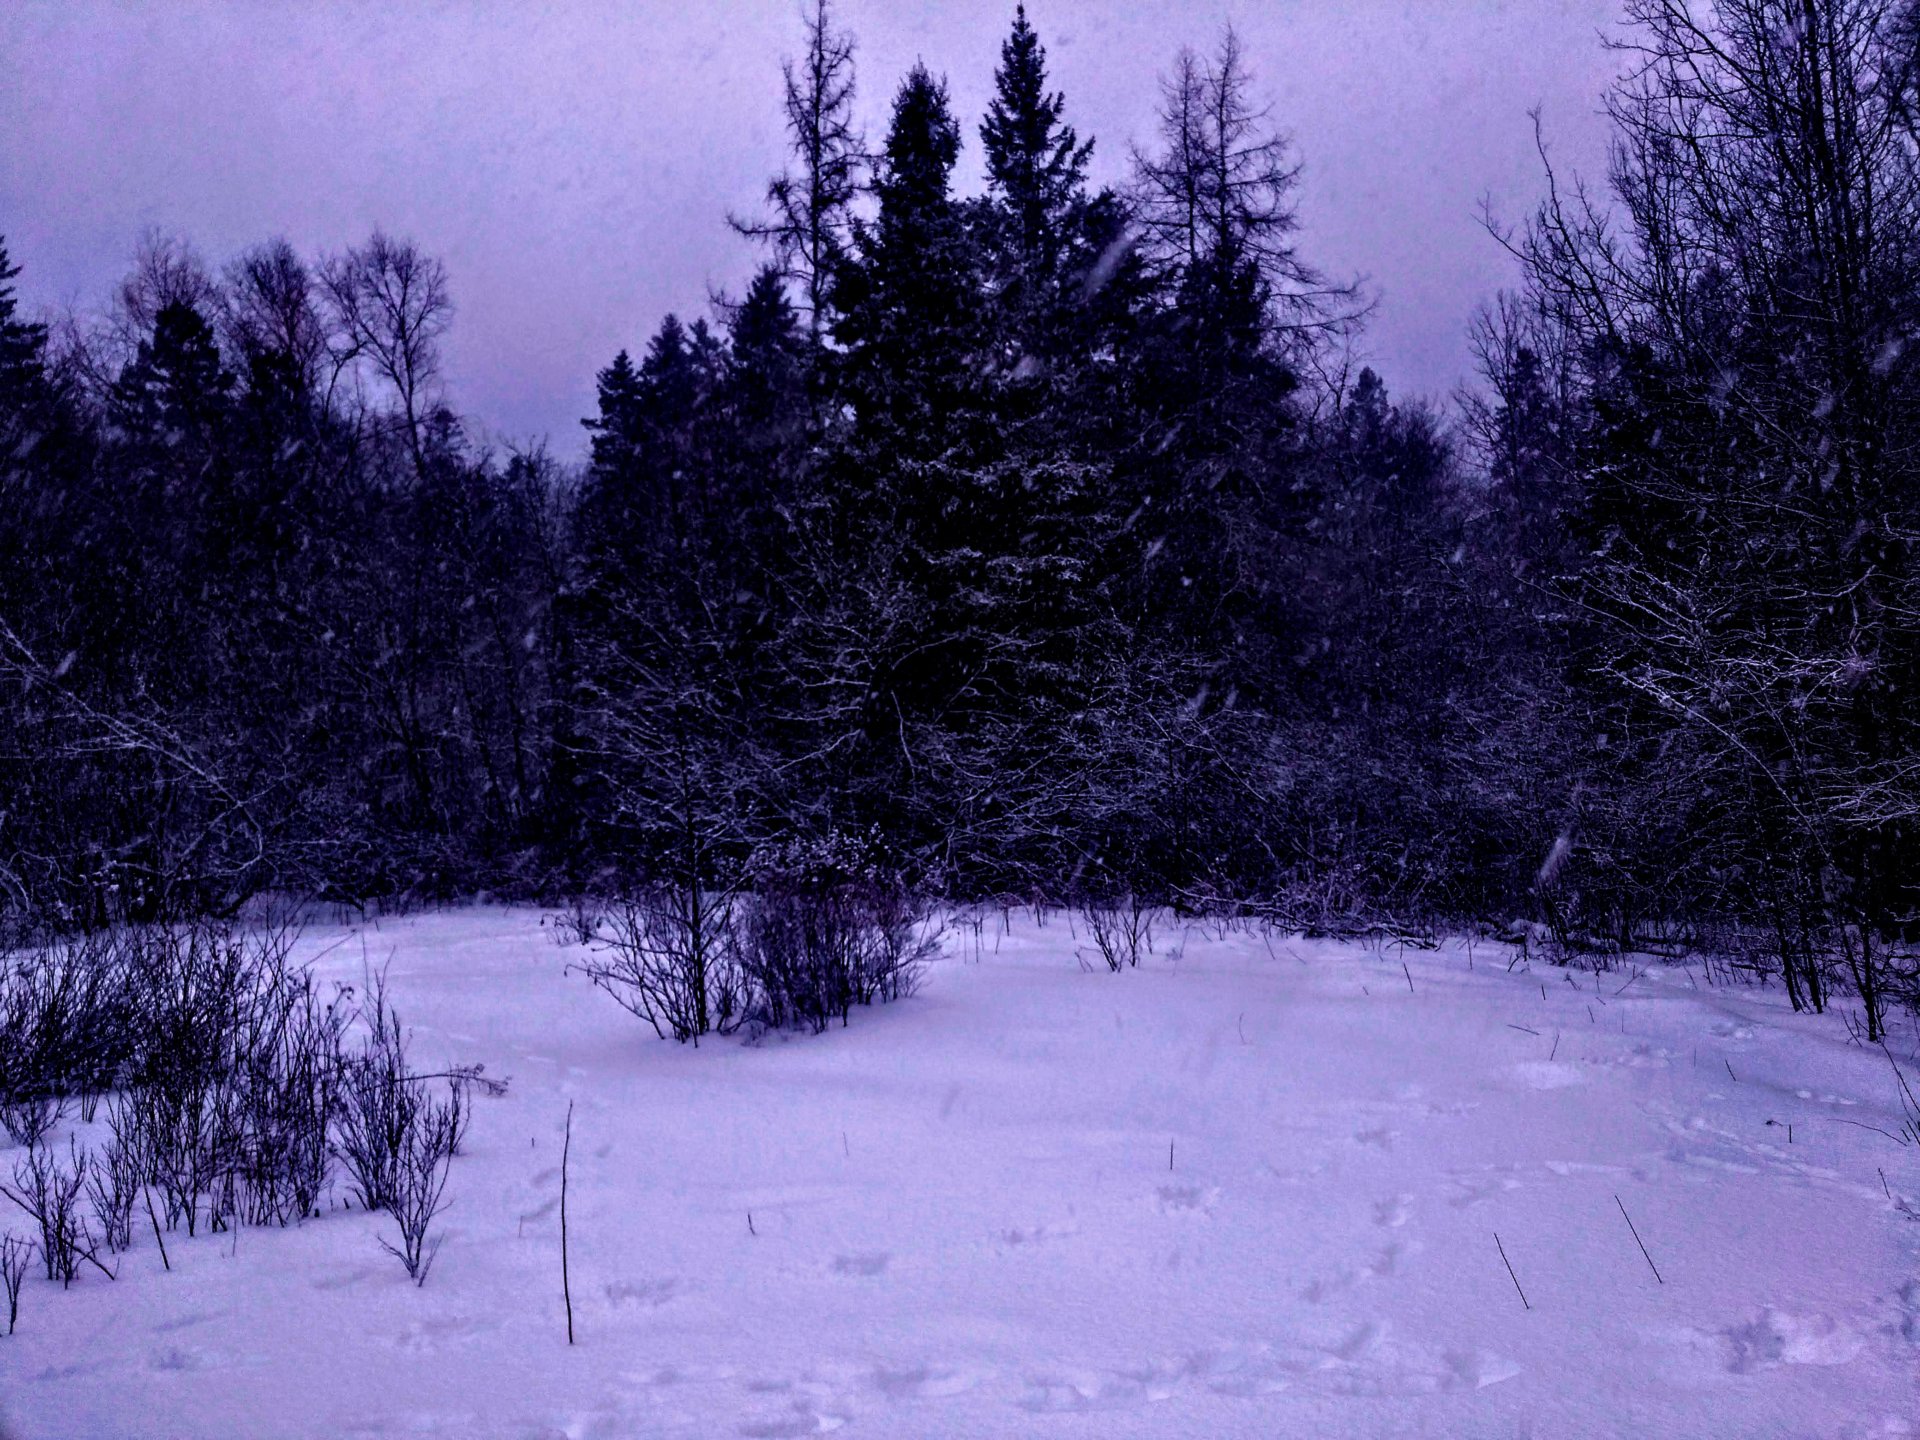 Dark trees in winter.